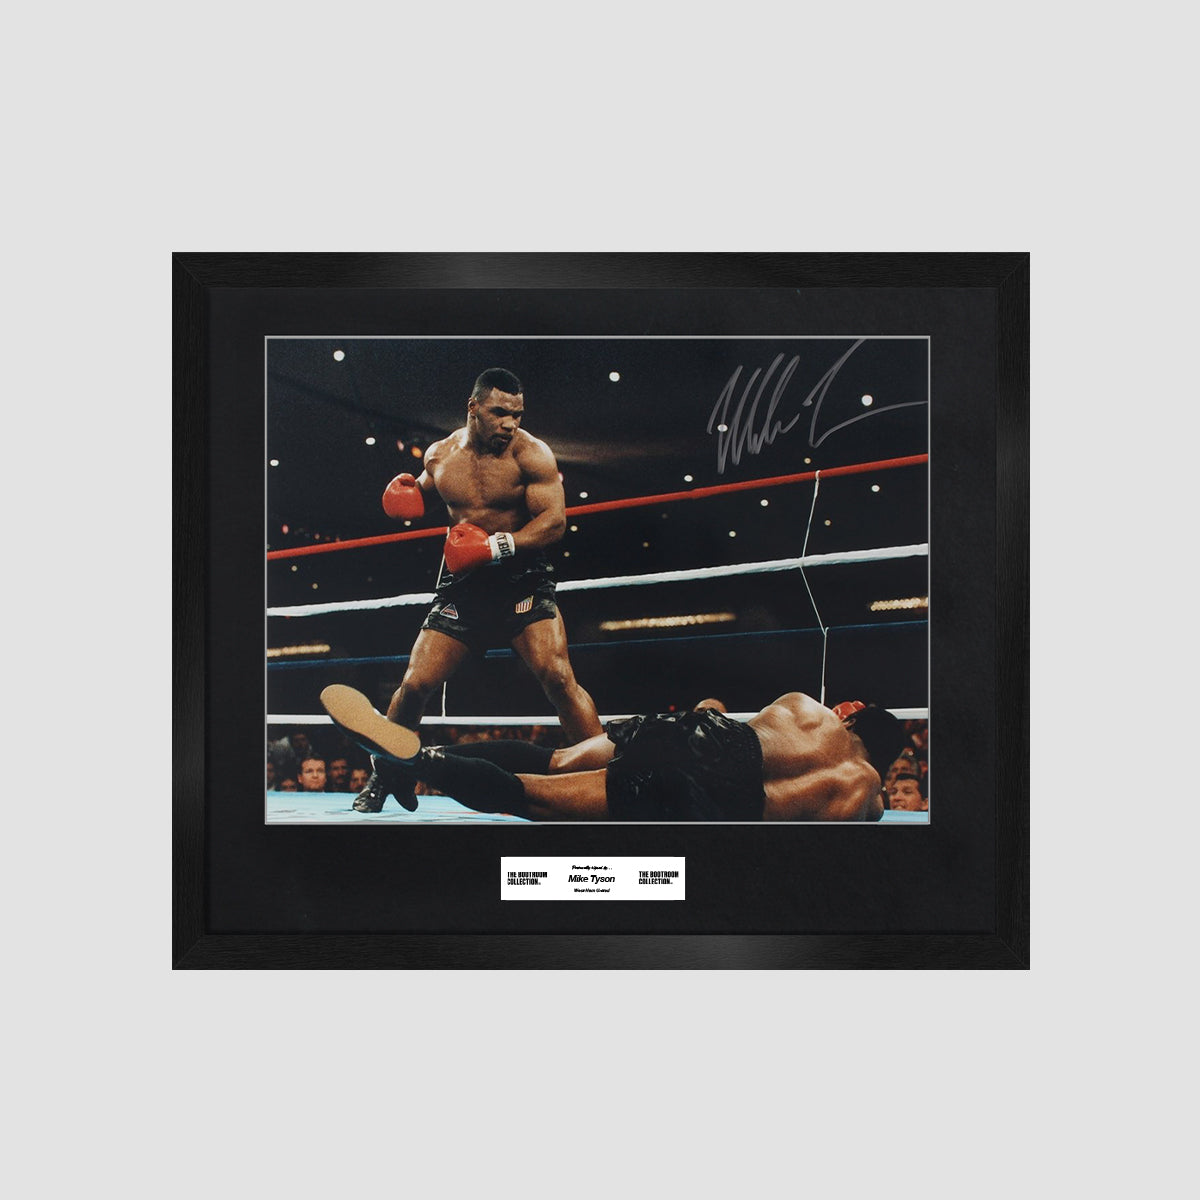 Mike Tyson Signed Image - Knocking Out Trevor Berbick (Framed)